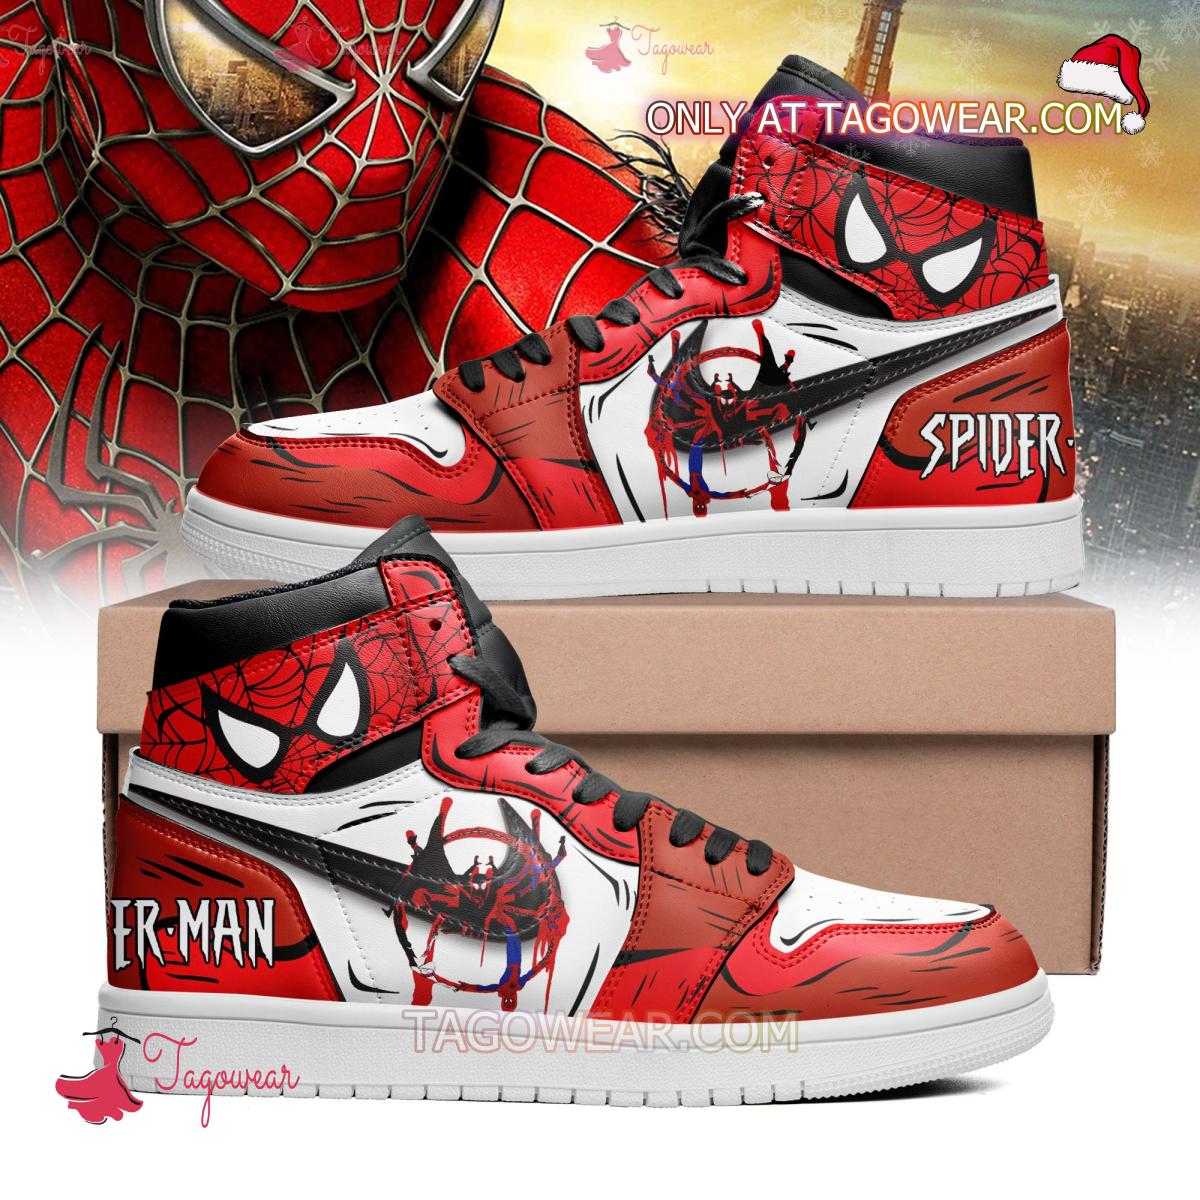 Spider-man Superhero Air Jordan High Top Shoes